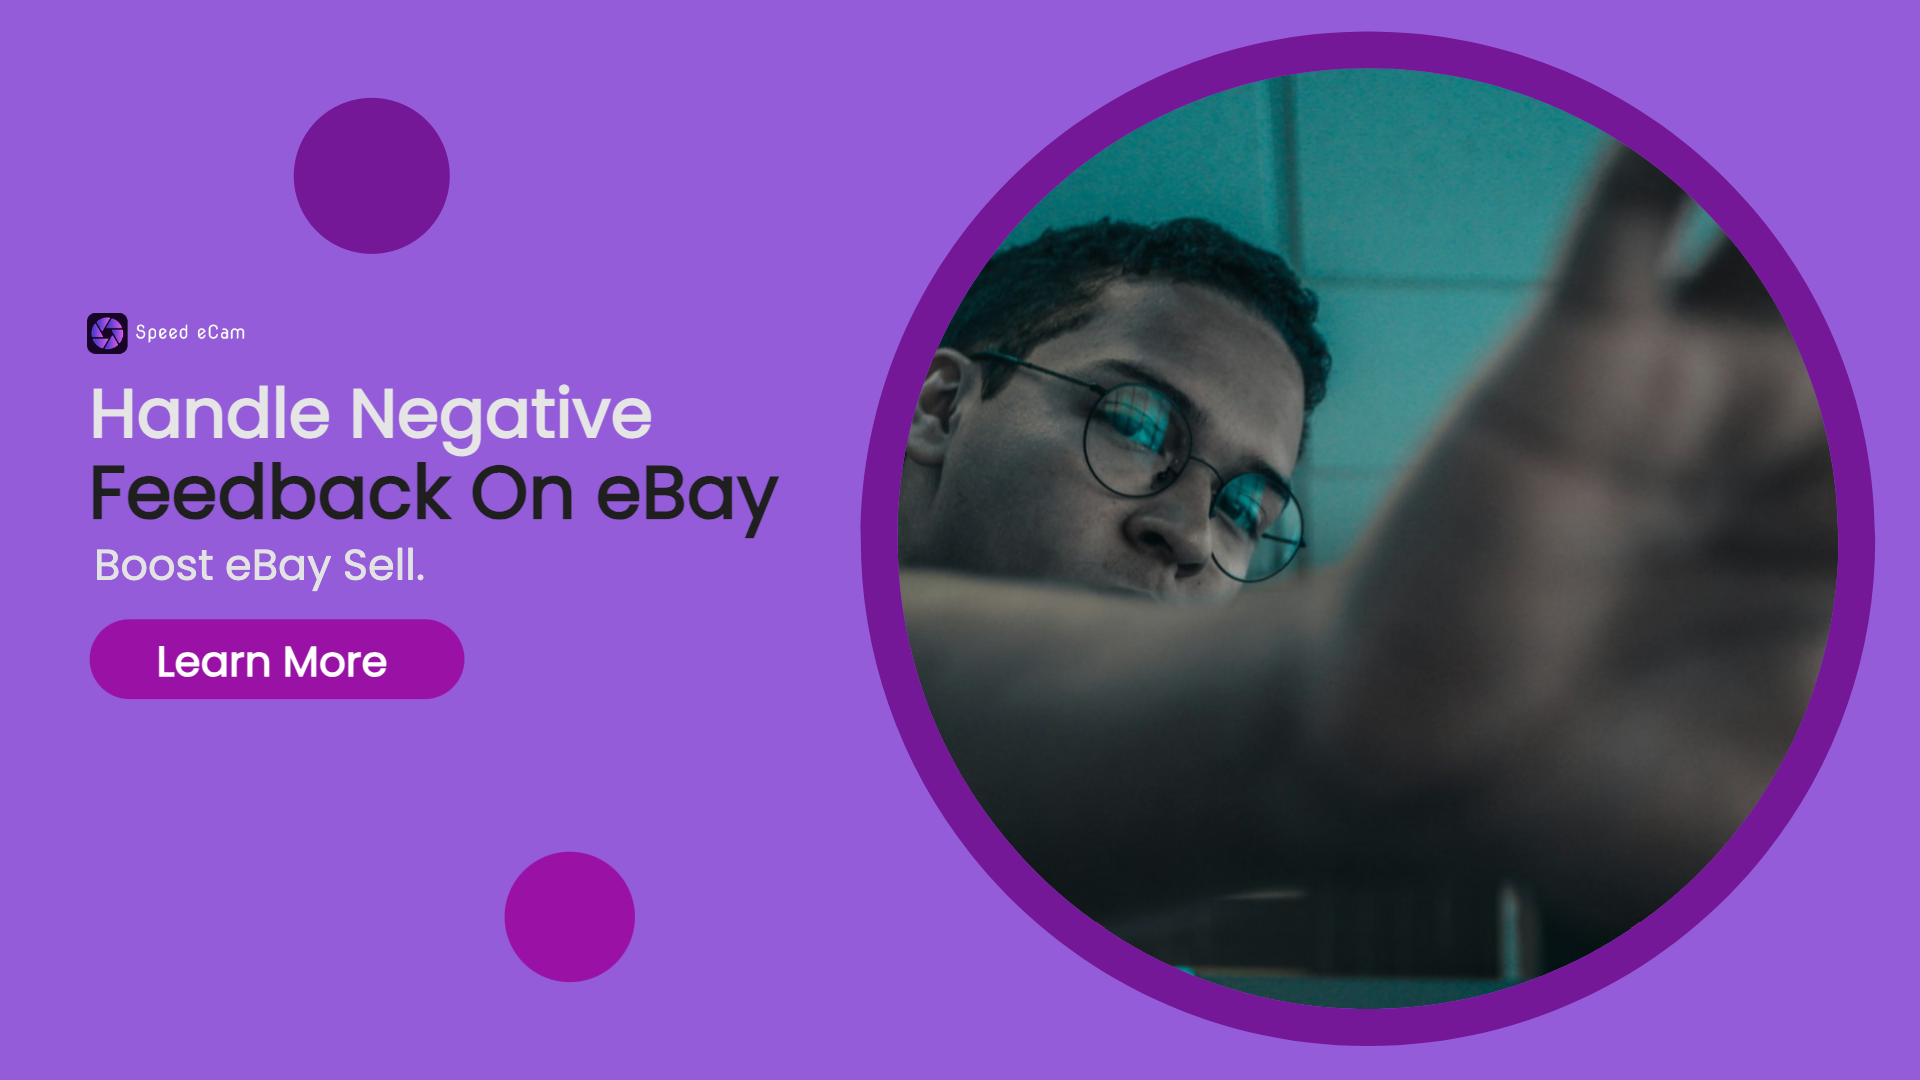 How to Handle Negative Feedback on eBay